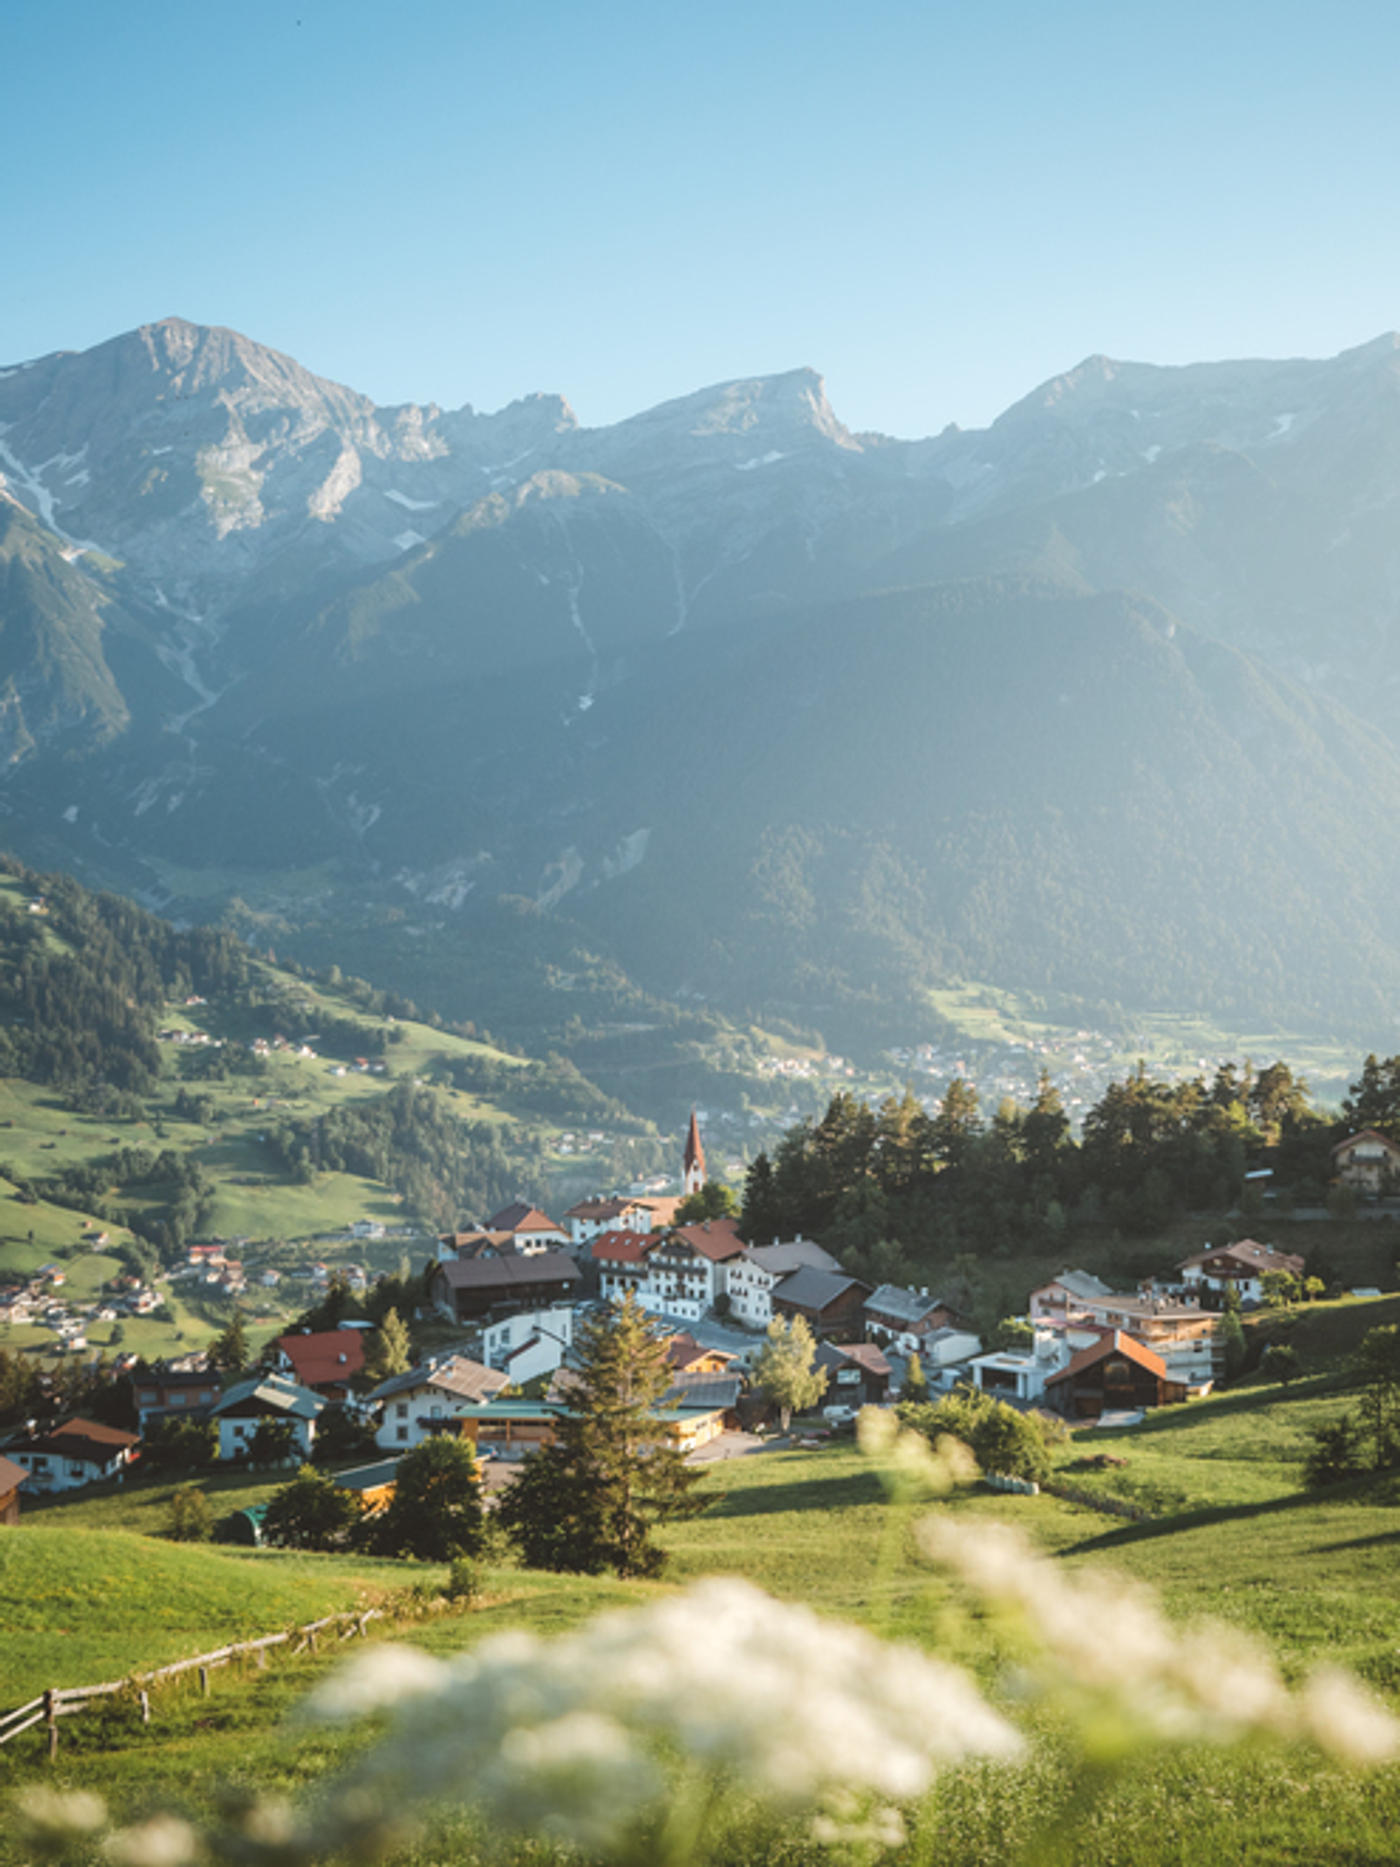 Tyrol: Your Alpine adventure awaits